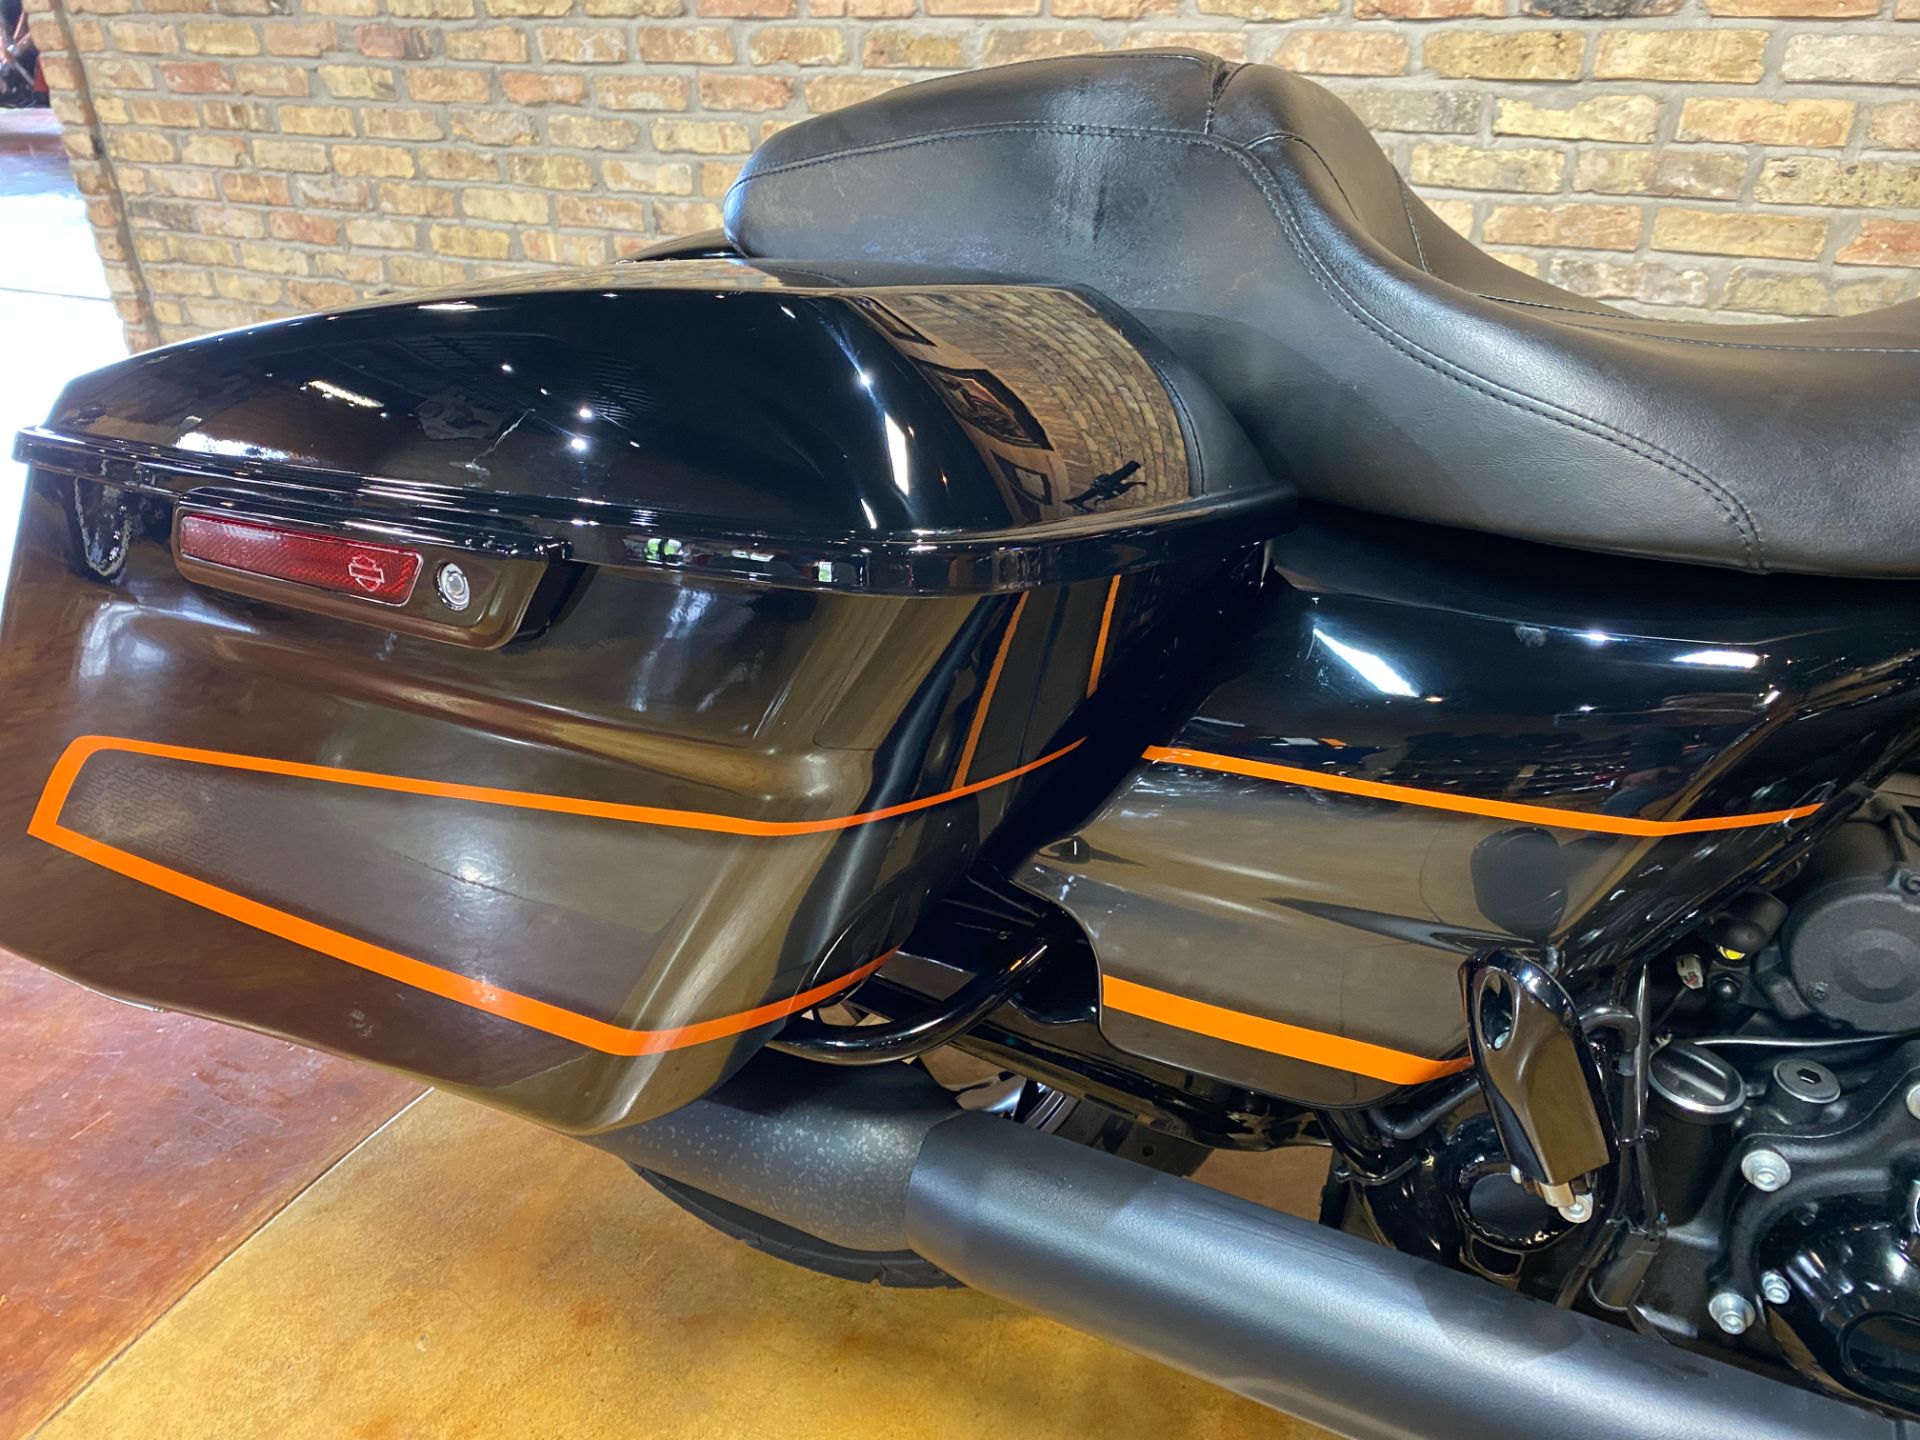 2022 Harley-Davidson Street Glide® Special in Big Bend, Wisconsin - Photo 5